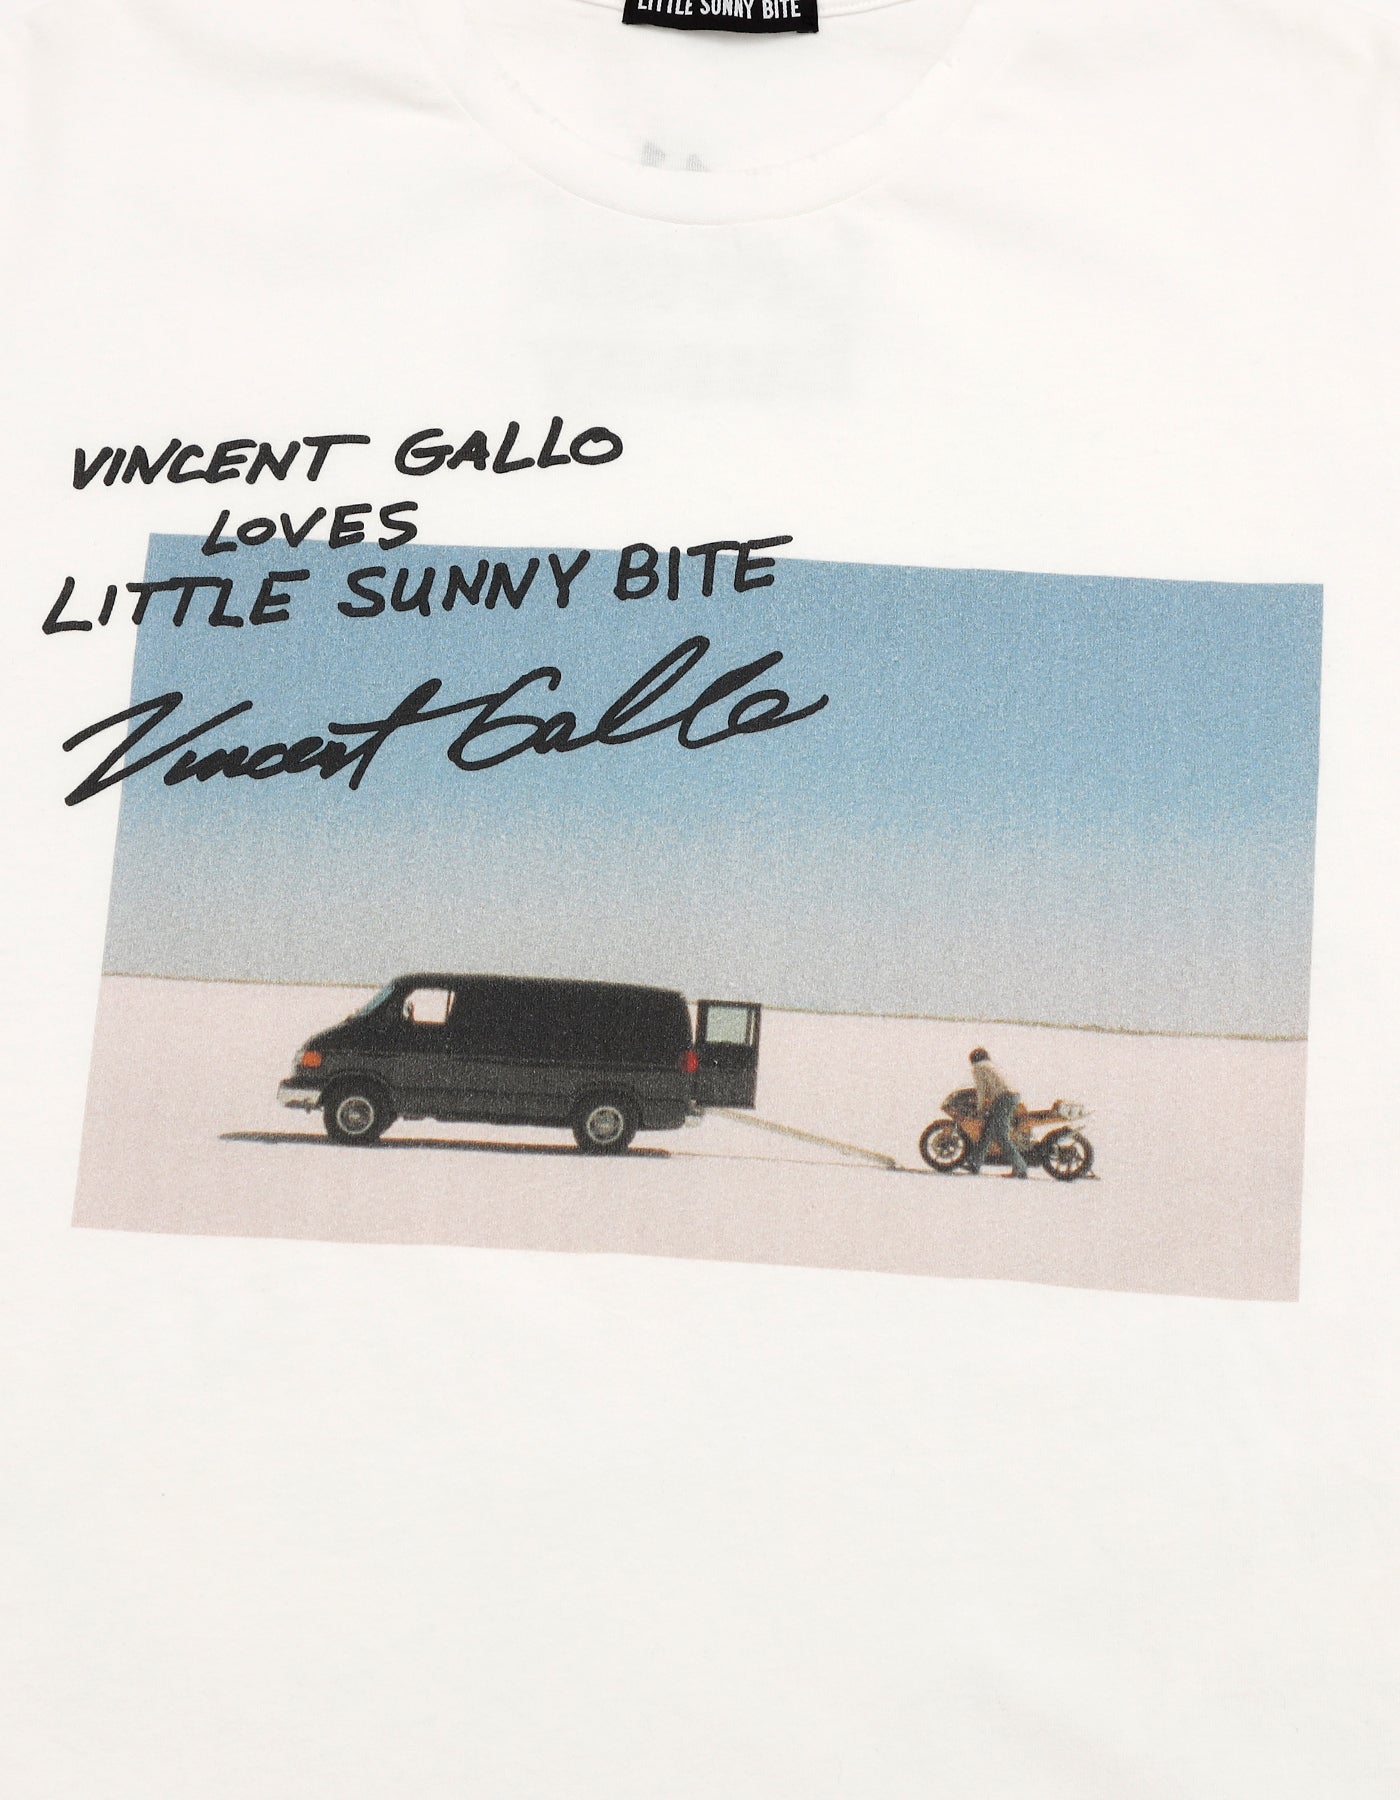 Vincent Gallo x little sunny bite photo tee / WHITE